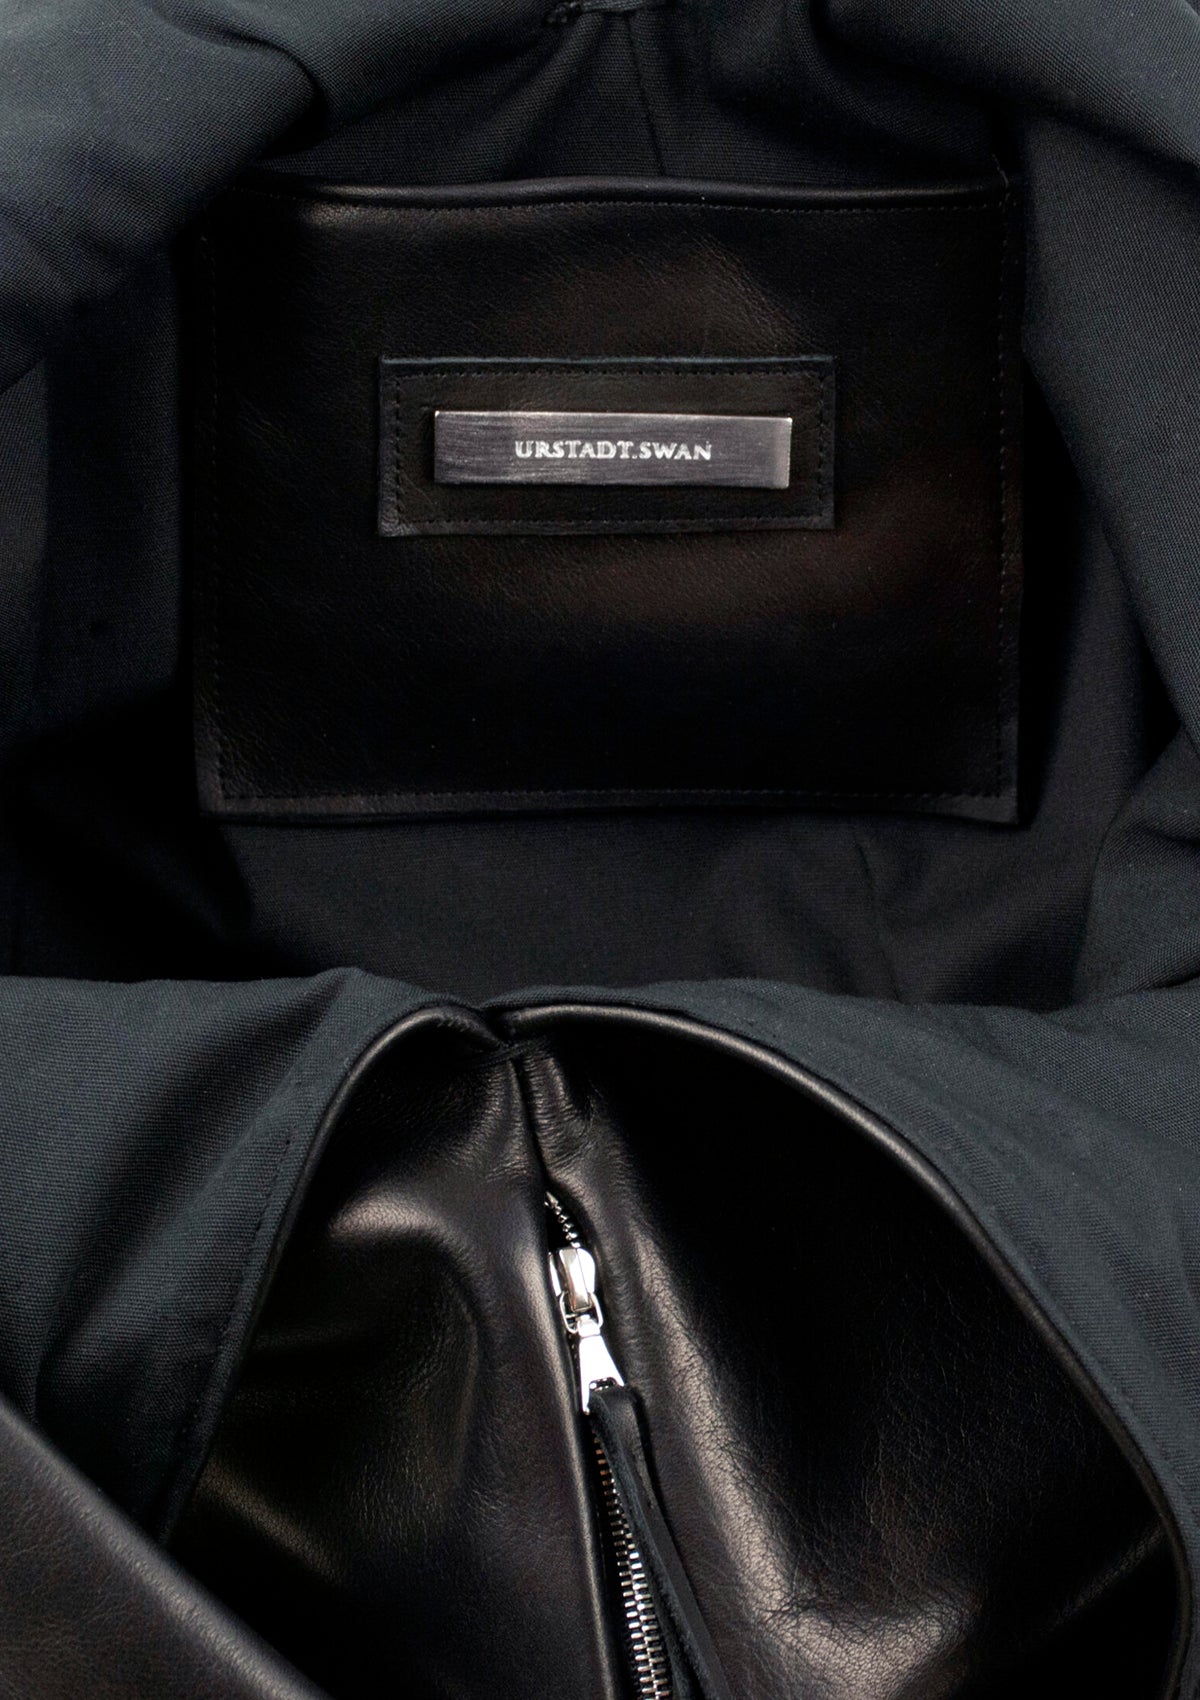 Soho Tote bag purses fashion accessories